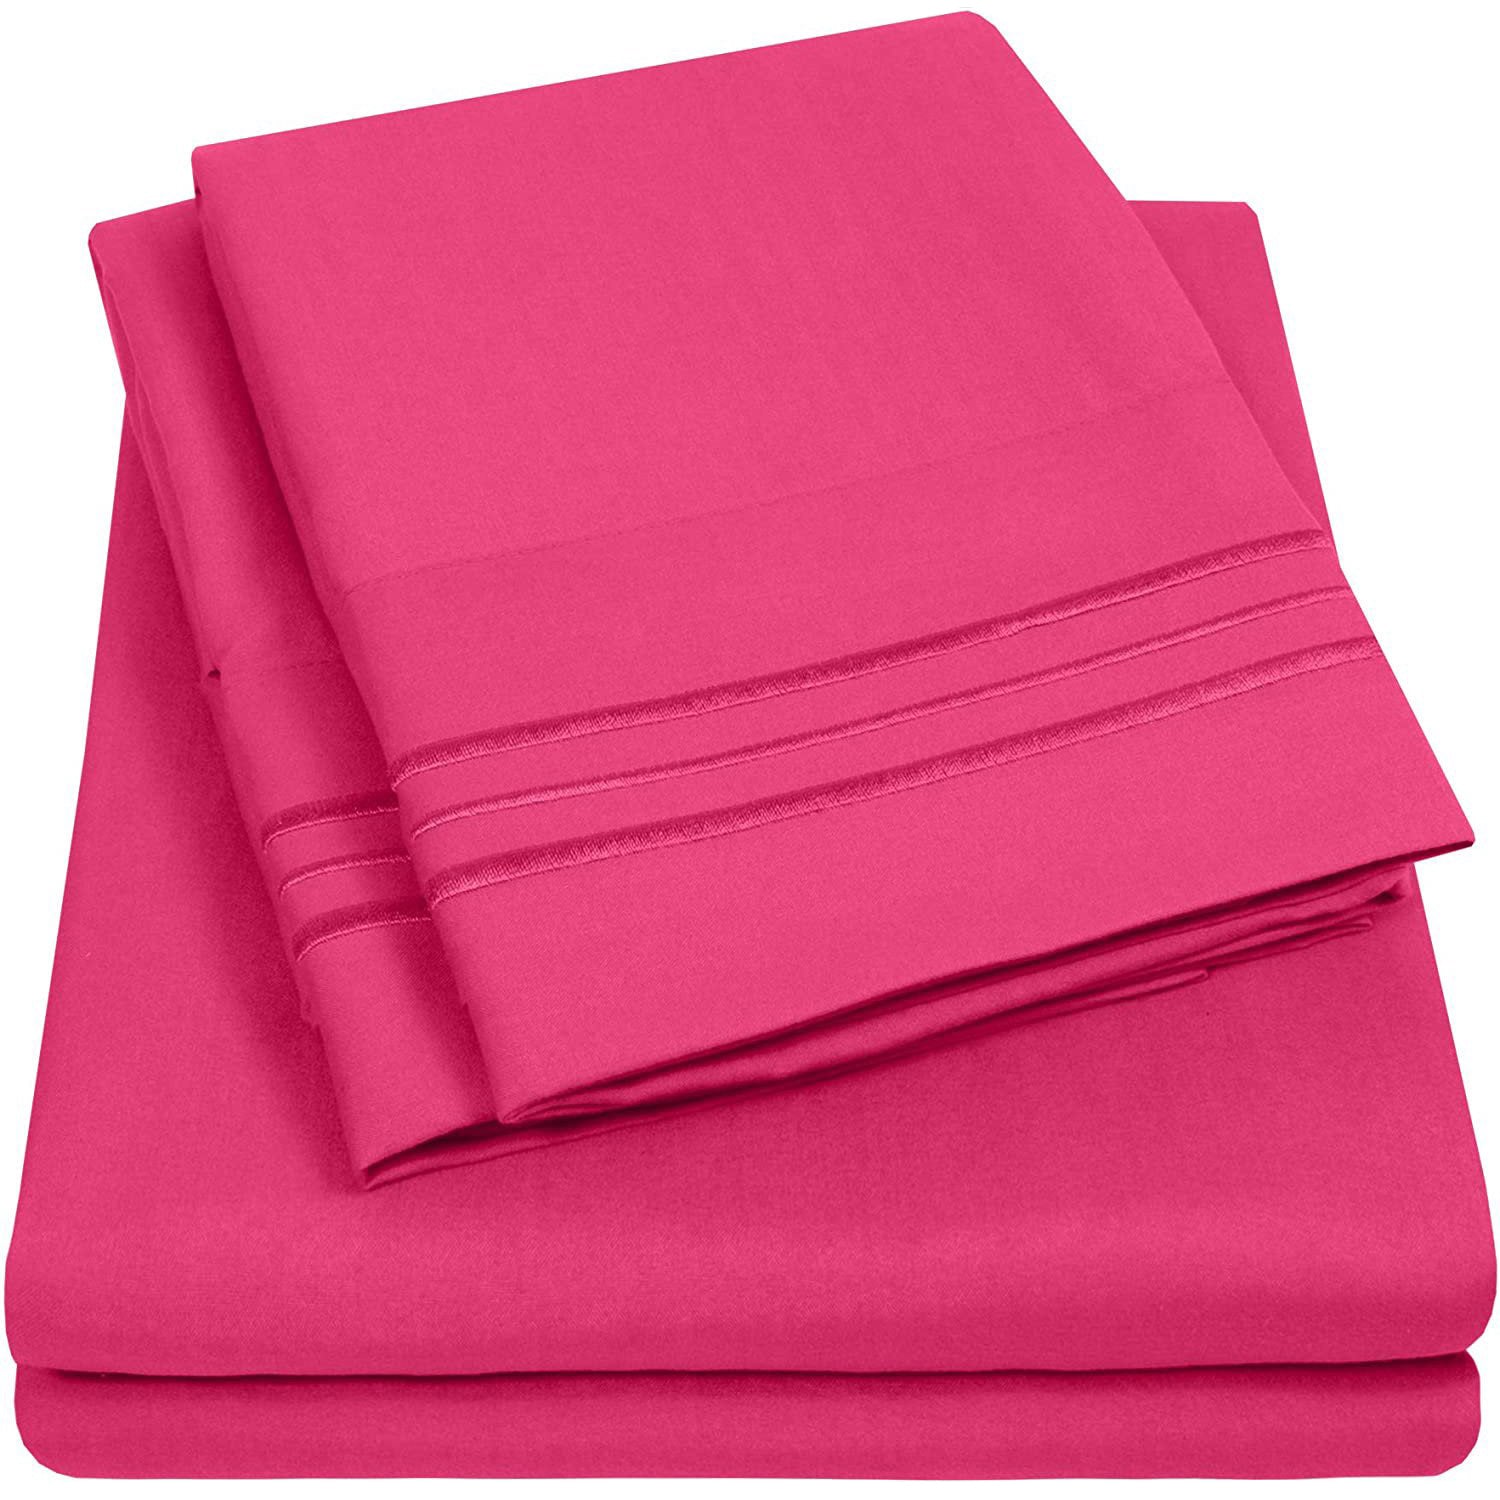 Classic 4-Piece Bed Sheet Set (Fuchsia) - Folded